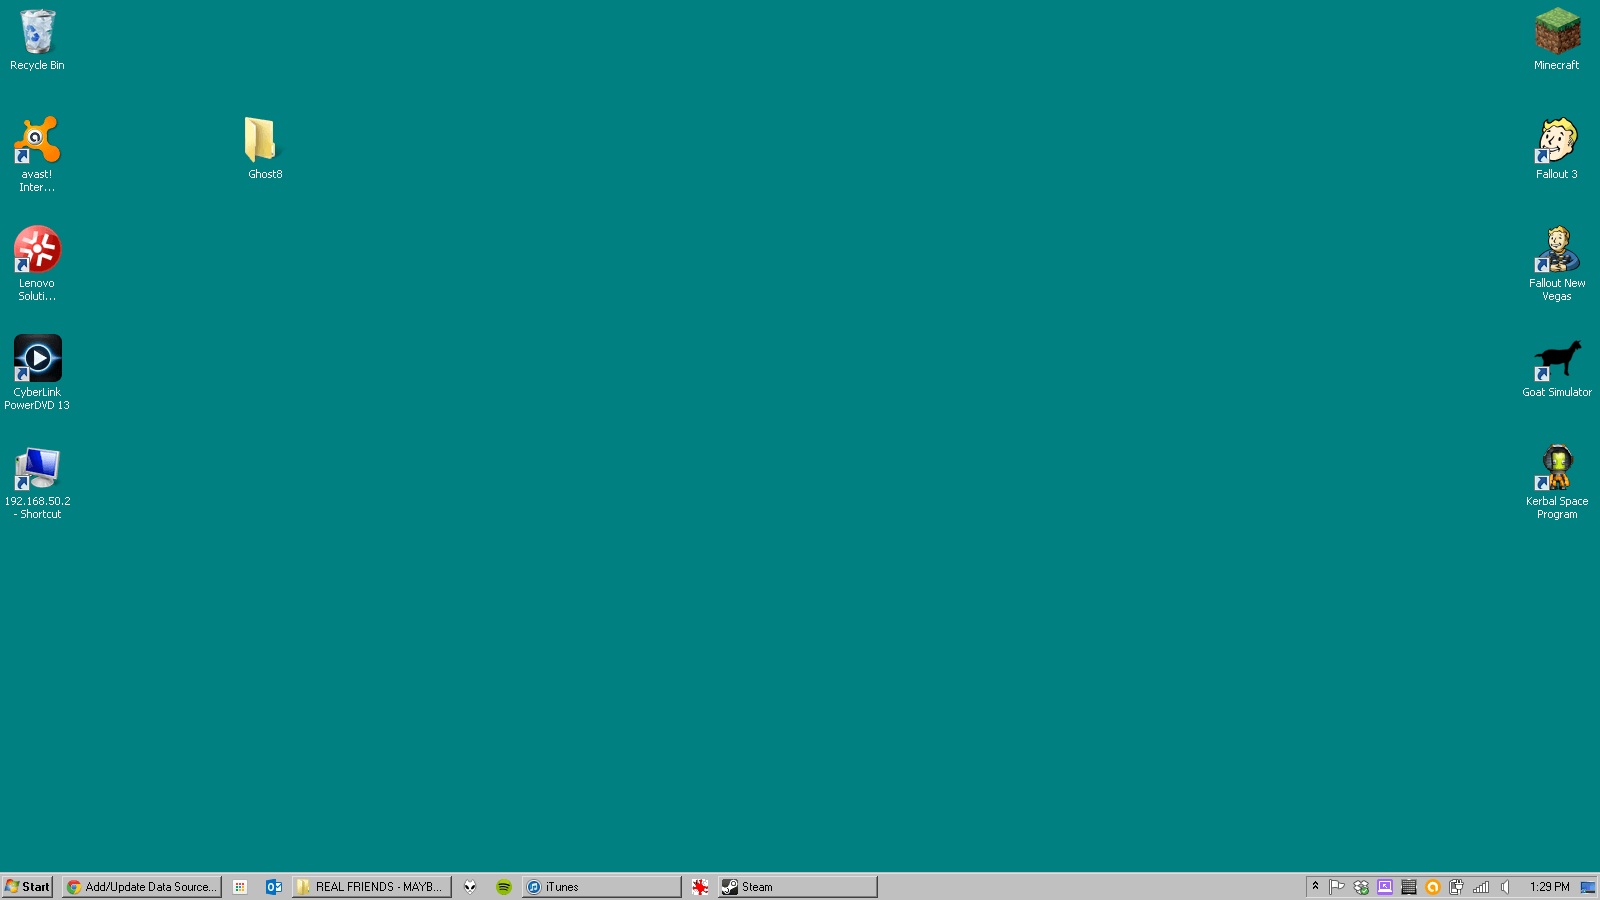 Windows 95 Backgrounds Wallpaper Cave